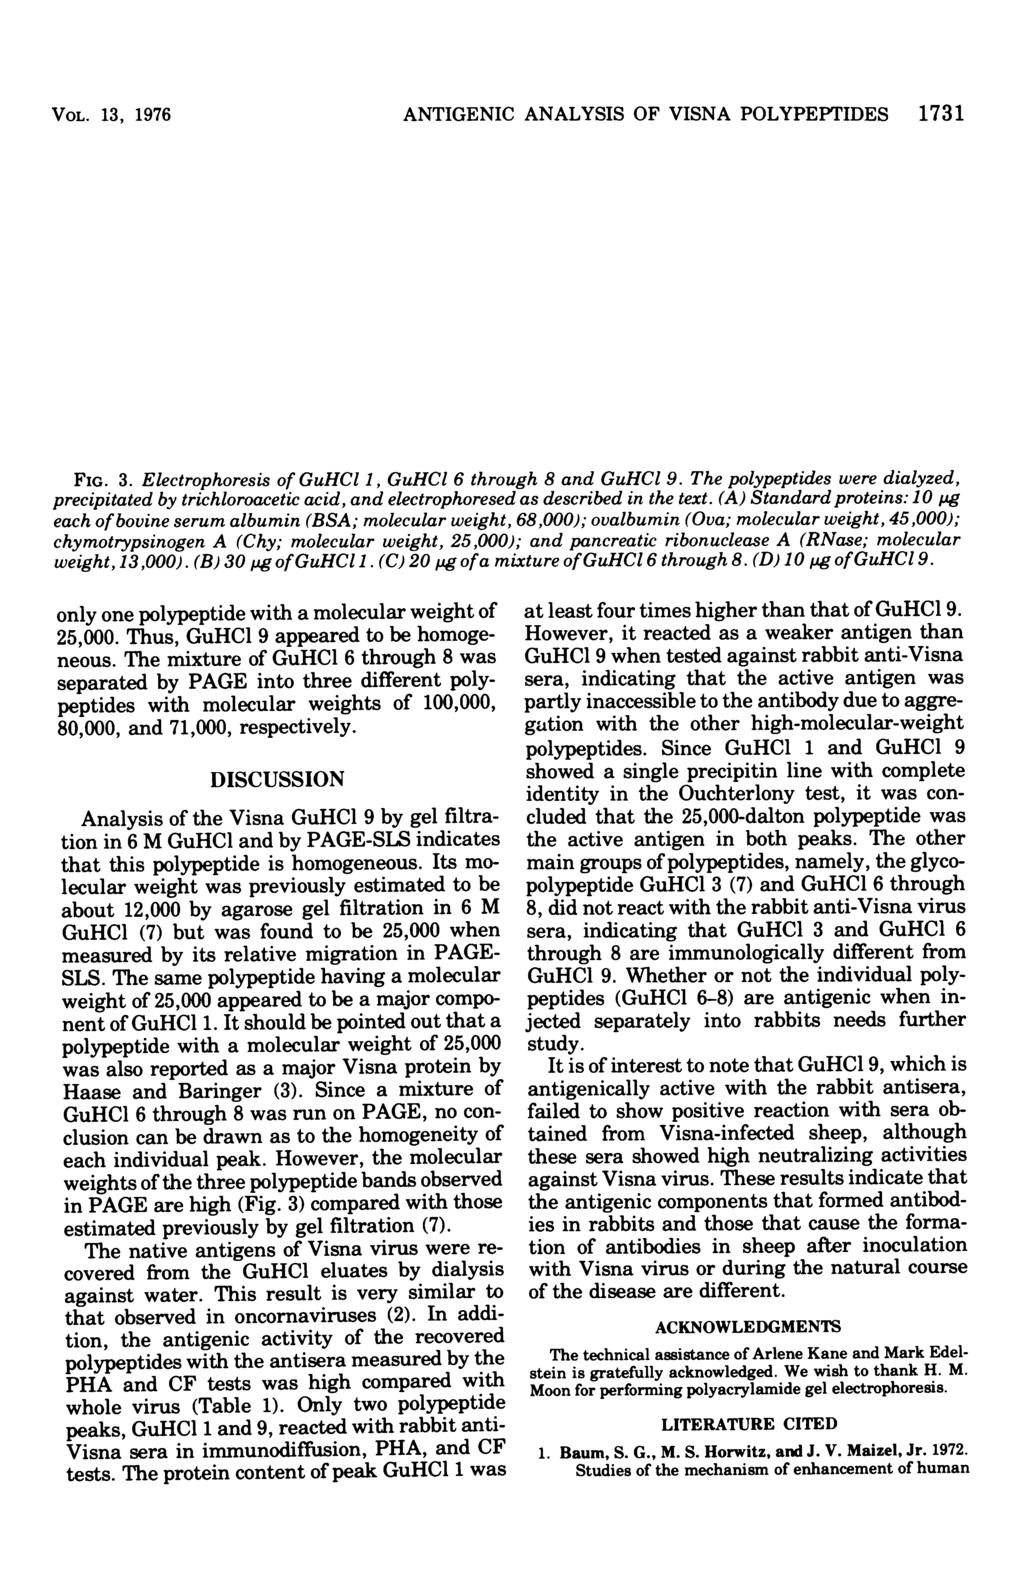 VOL. 13, 1976 ANTIGENIC ANALYSIS OF VISNA POLYPEPTIDES 1731 BSA --* W~~4 Ova. - O- Chy. - o RNase --o A * I B C D FIG. 3. Electrophoresis of GuHCl 1, GuHCl 6 through 8 and GuHCI 9.